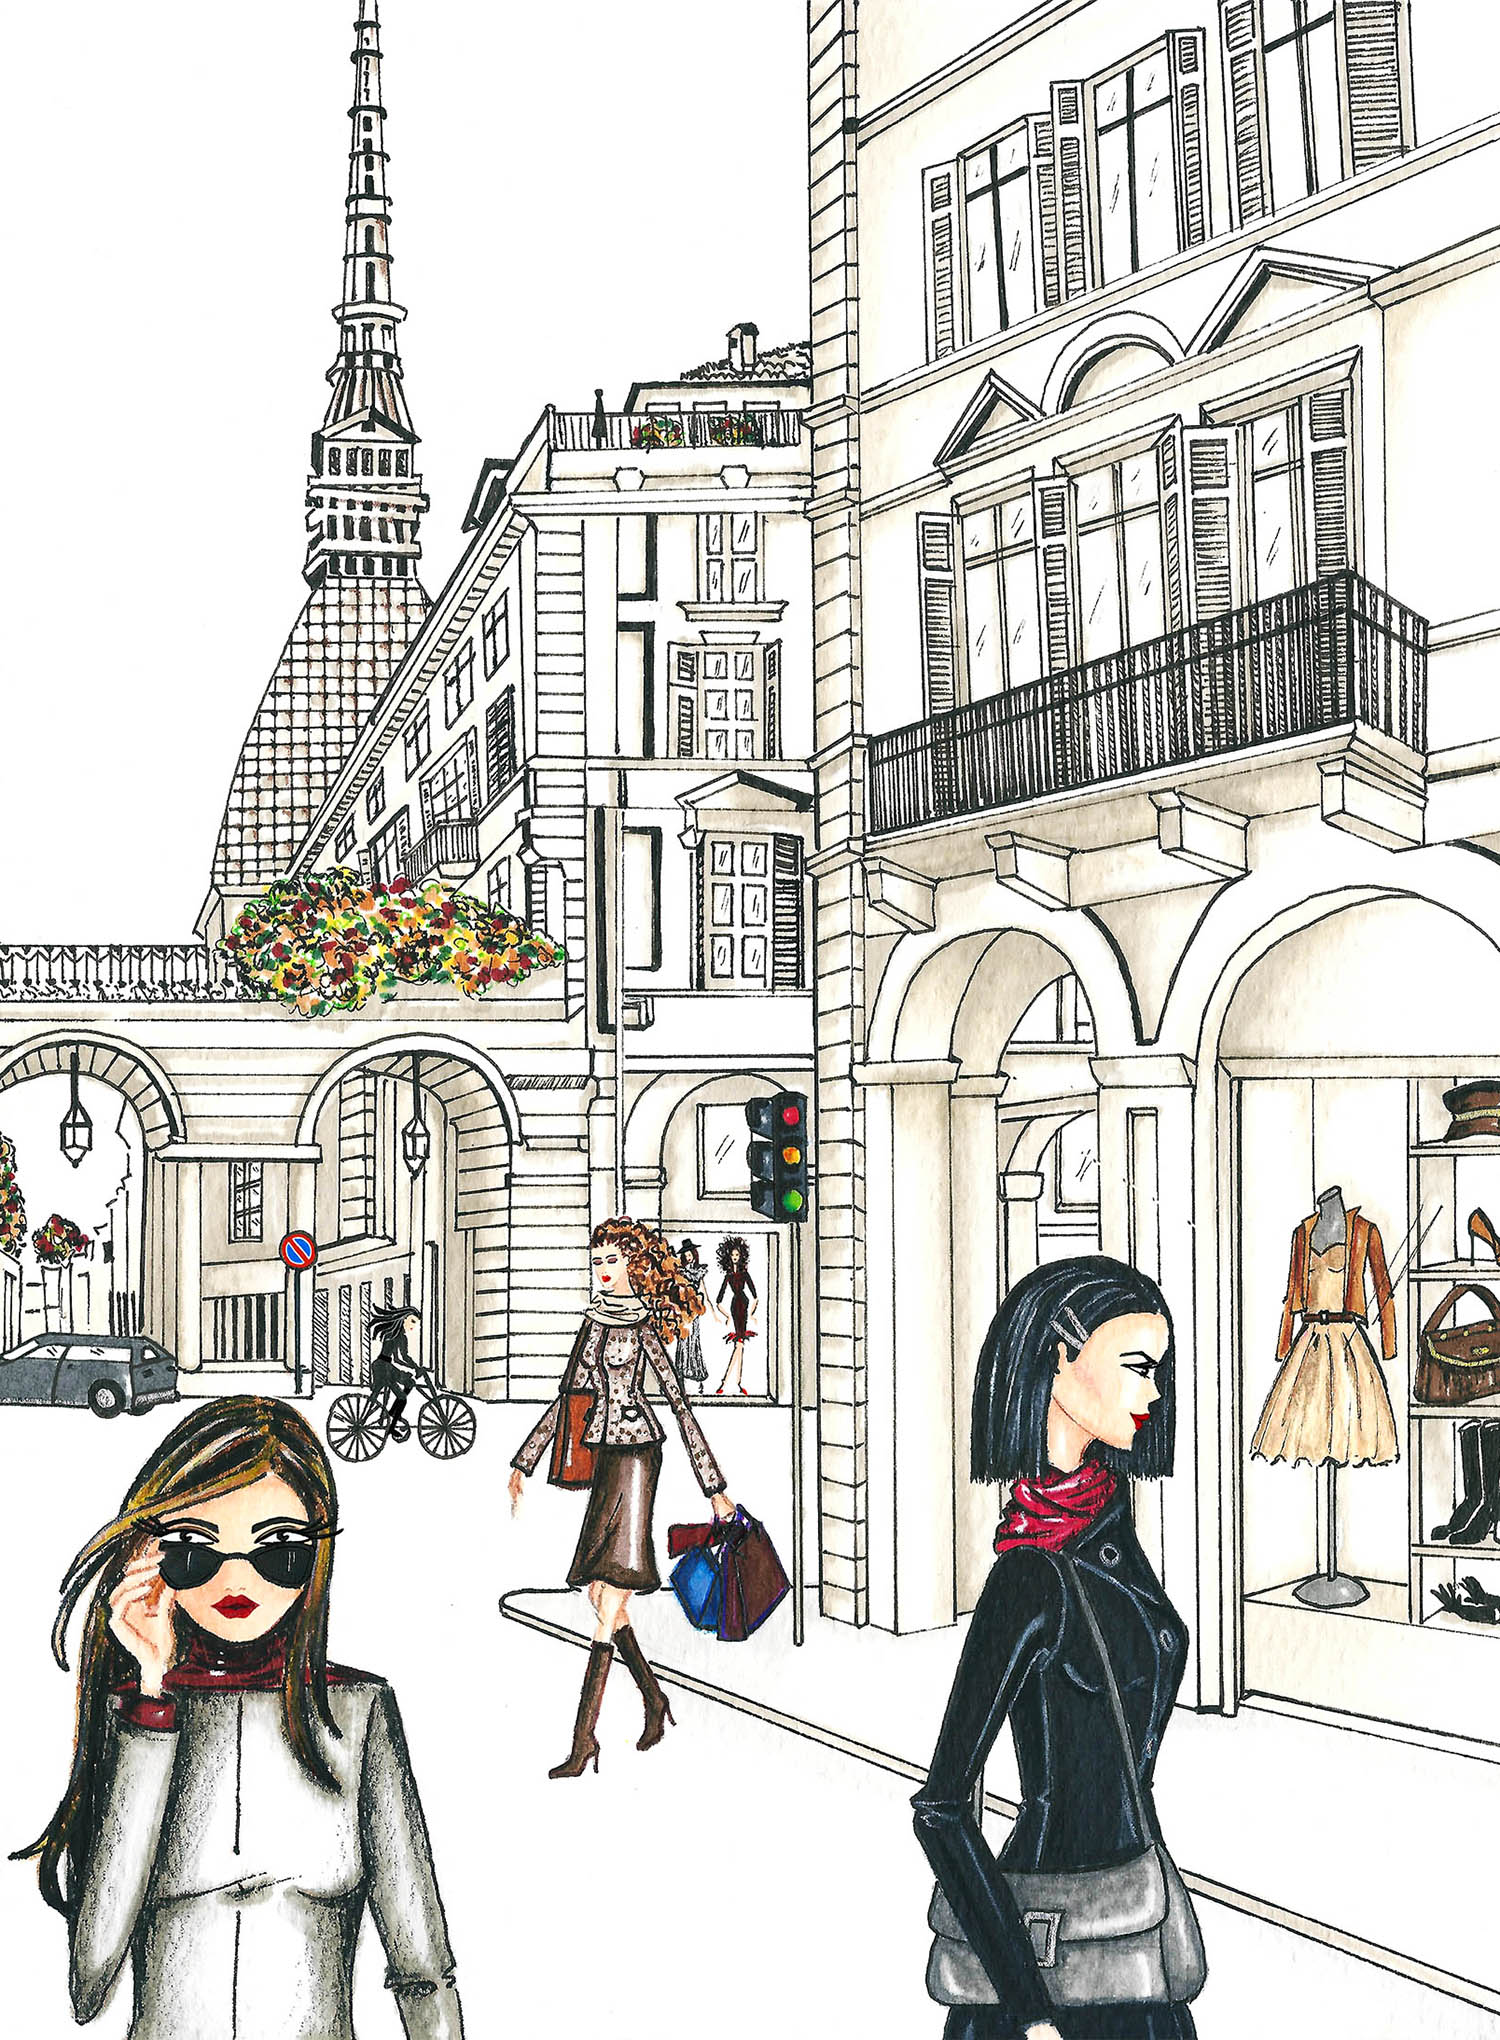 Fall Trends 2014, fashion windows in Turín – Italy